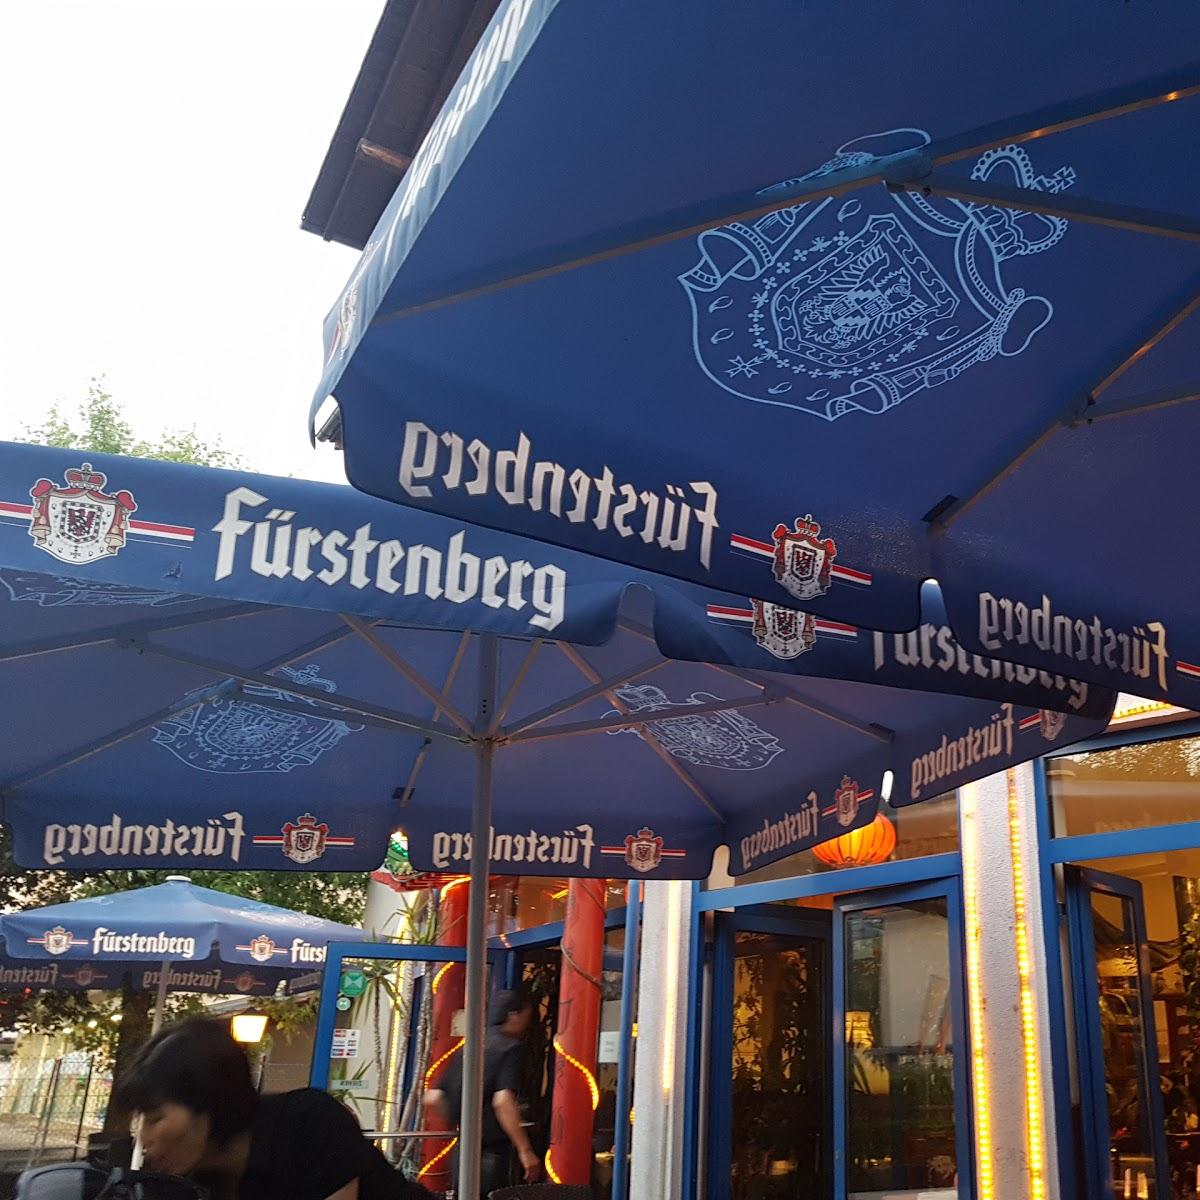 Restaurant "Gasthaus Adler" in  Lauchringen